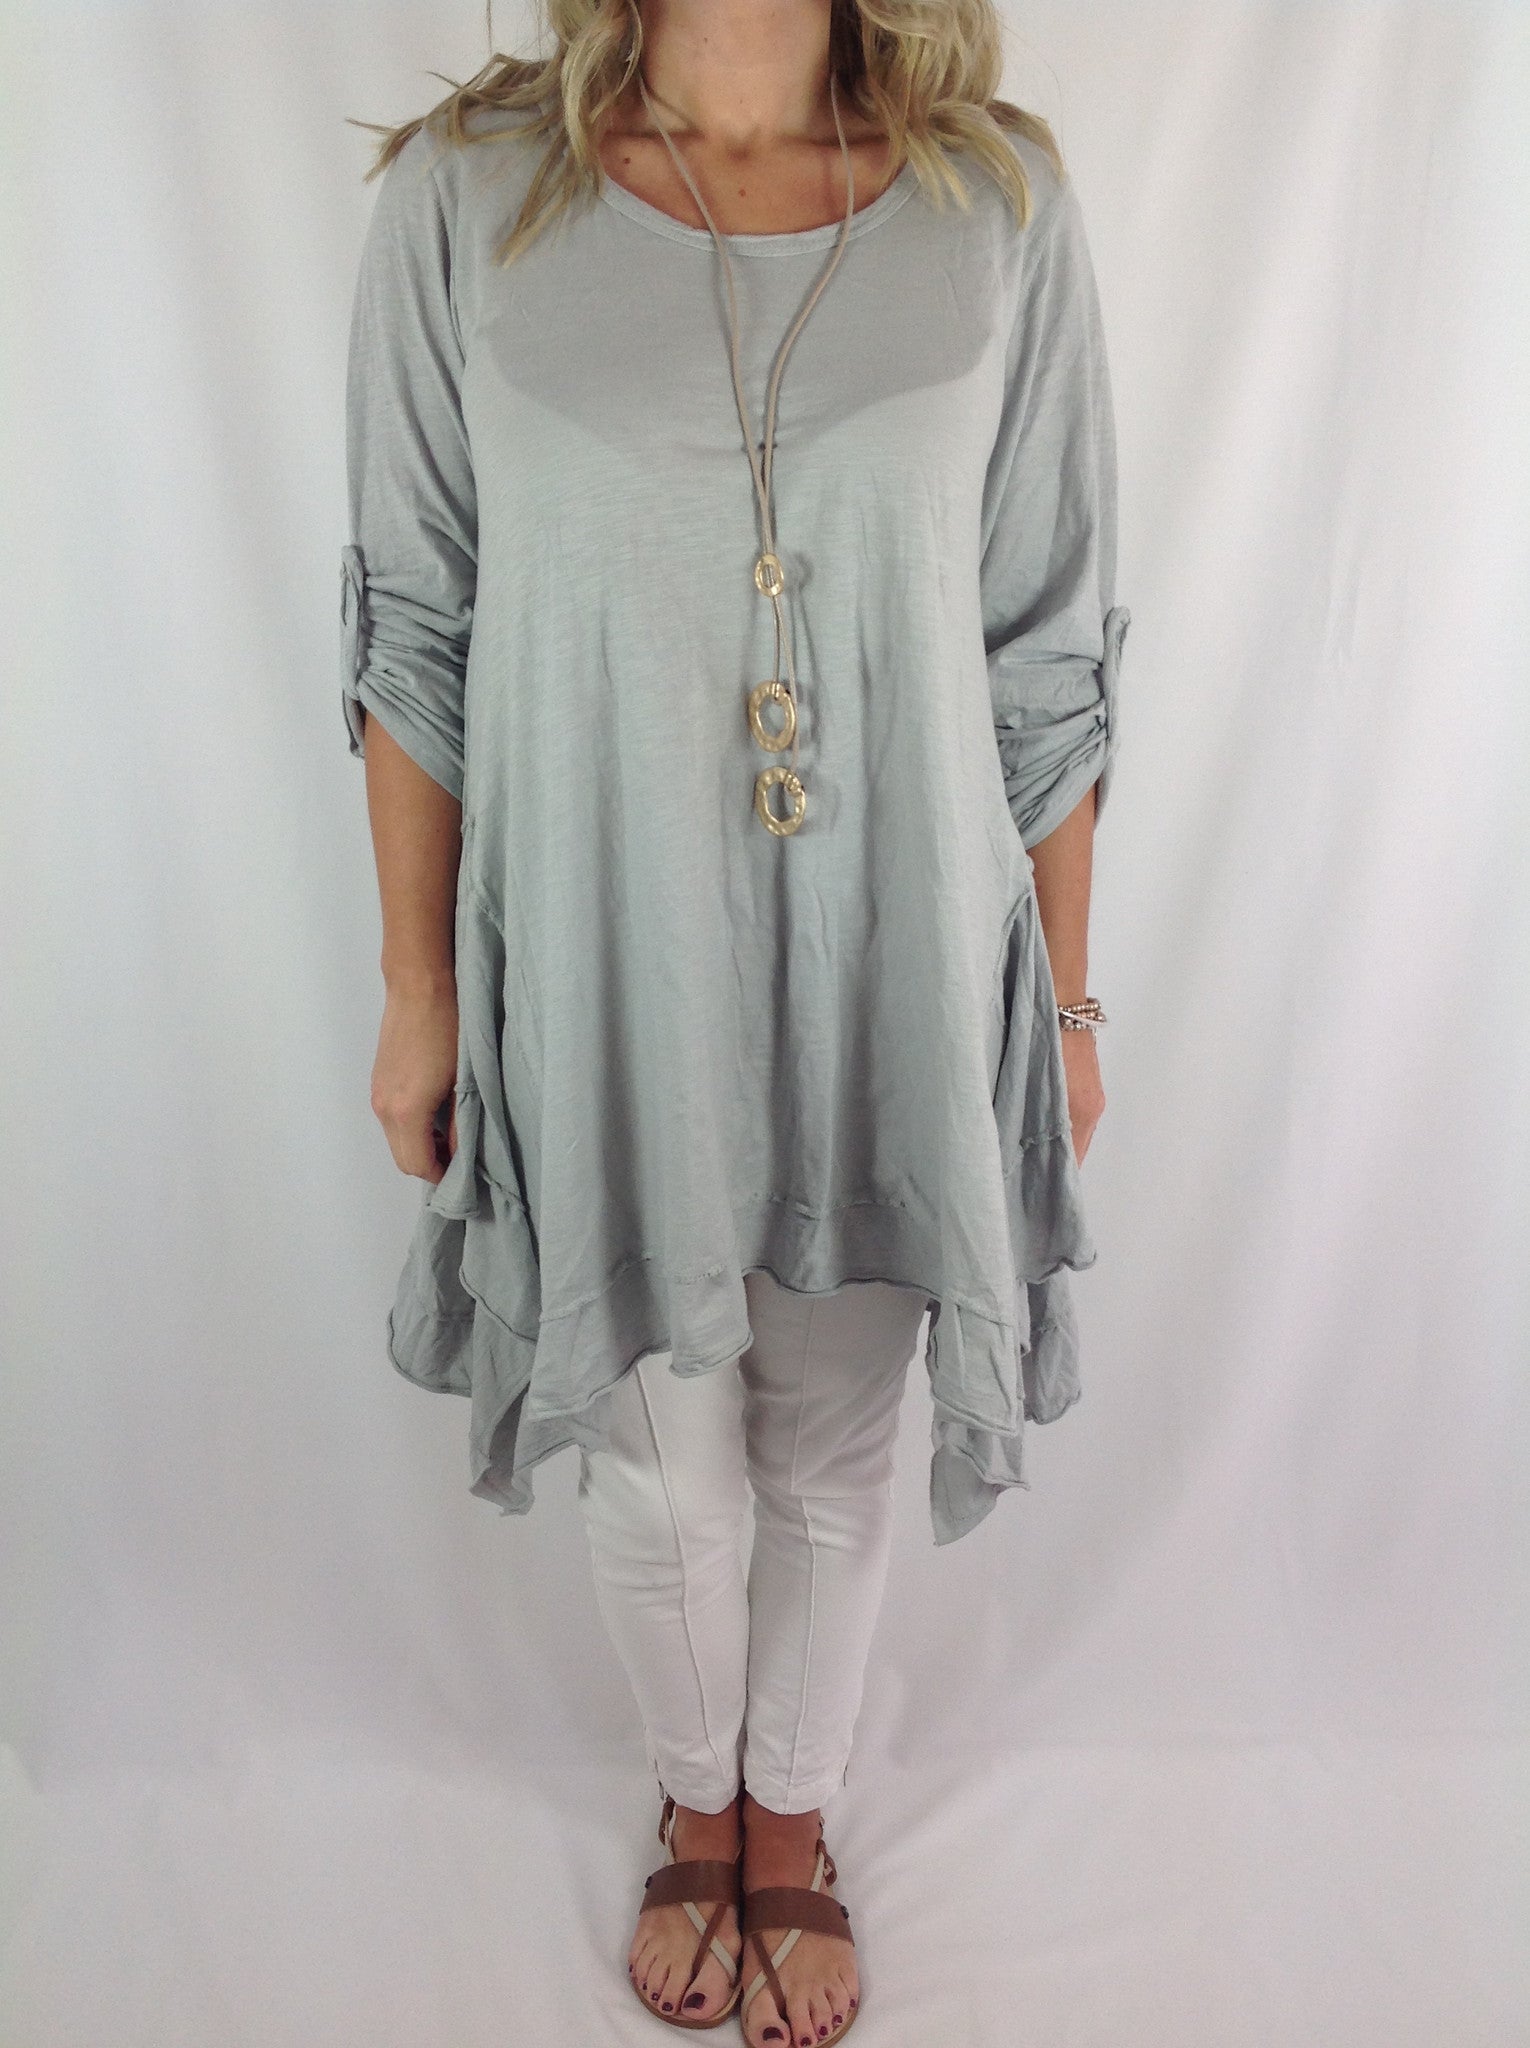 Lagenlook Quirky Angled Tunic in Grey.code 3553 - Lagenlook Clothing UK